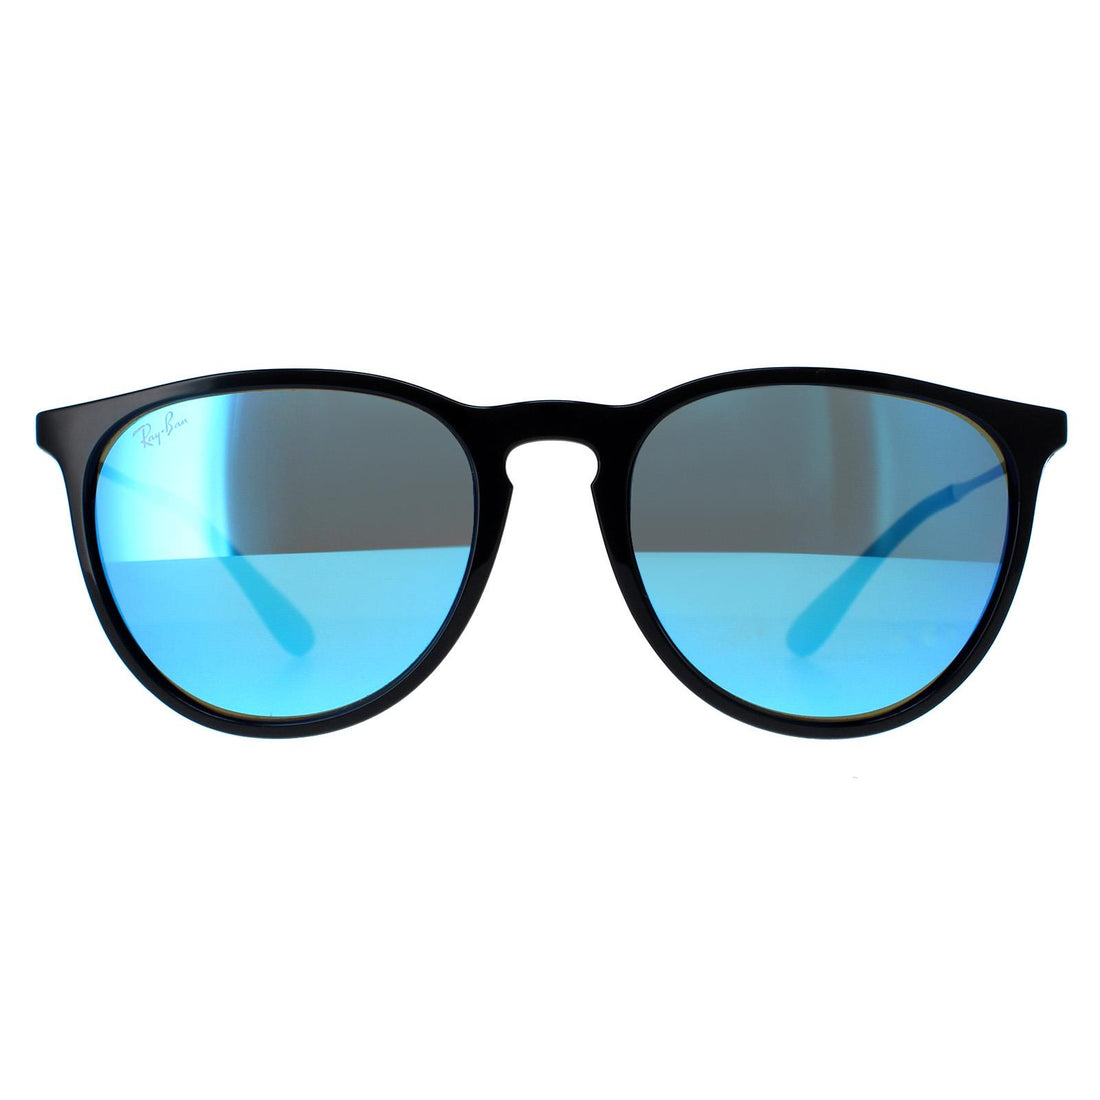 Ray-Ban Erika Classic RB4171 Sunglasses Black Grey Blue Mirror